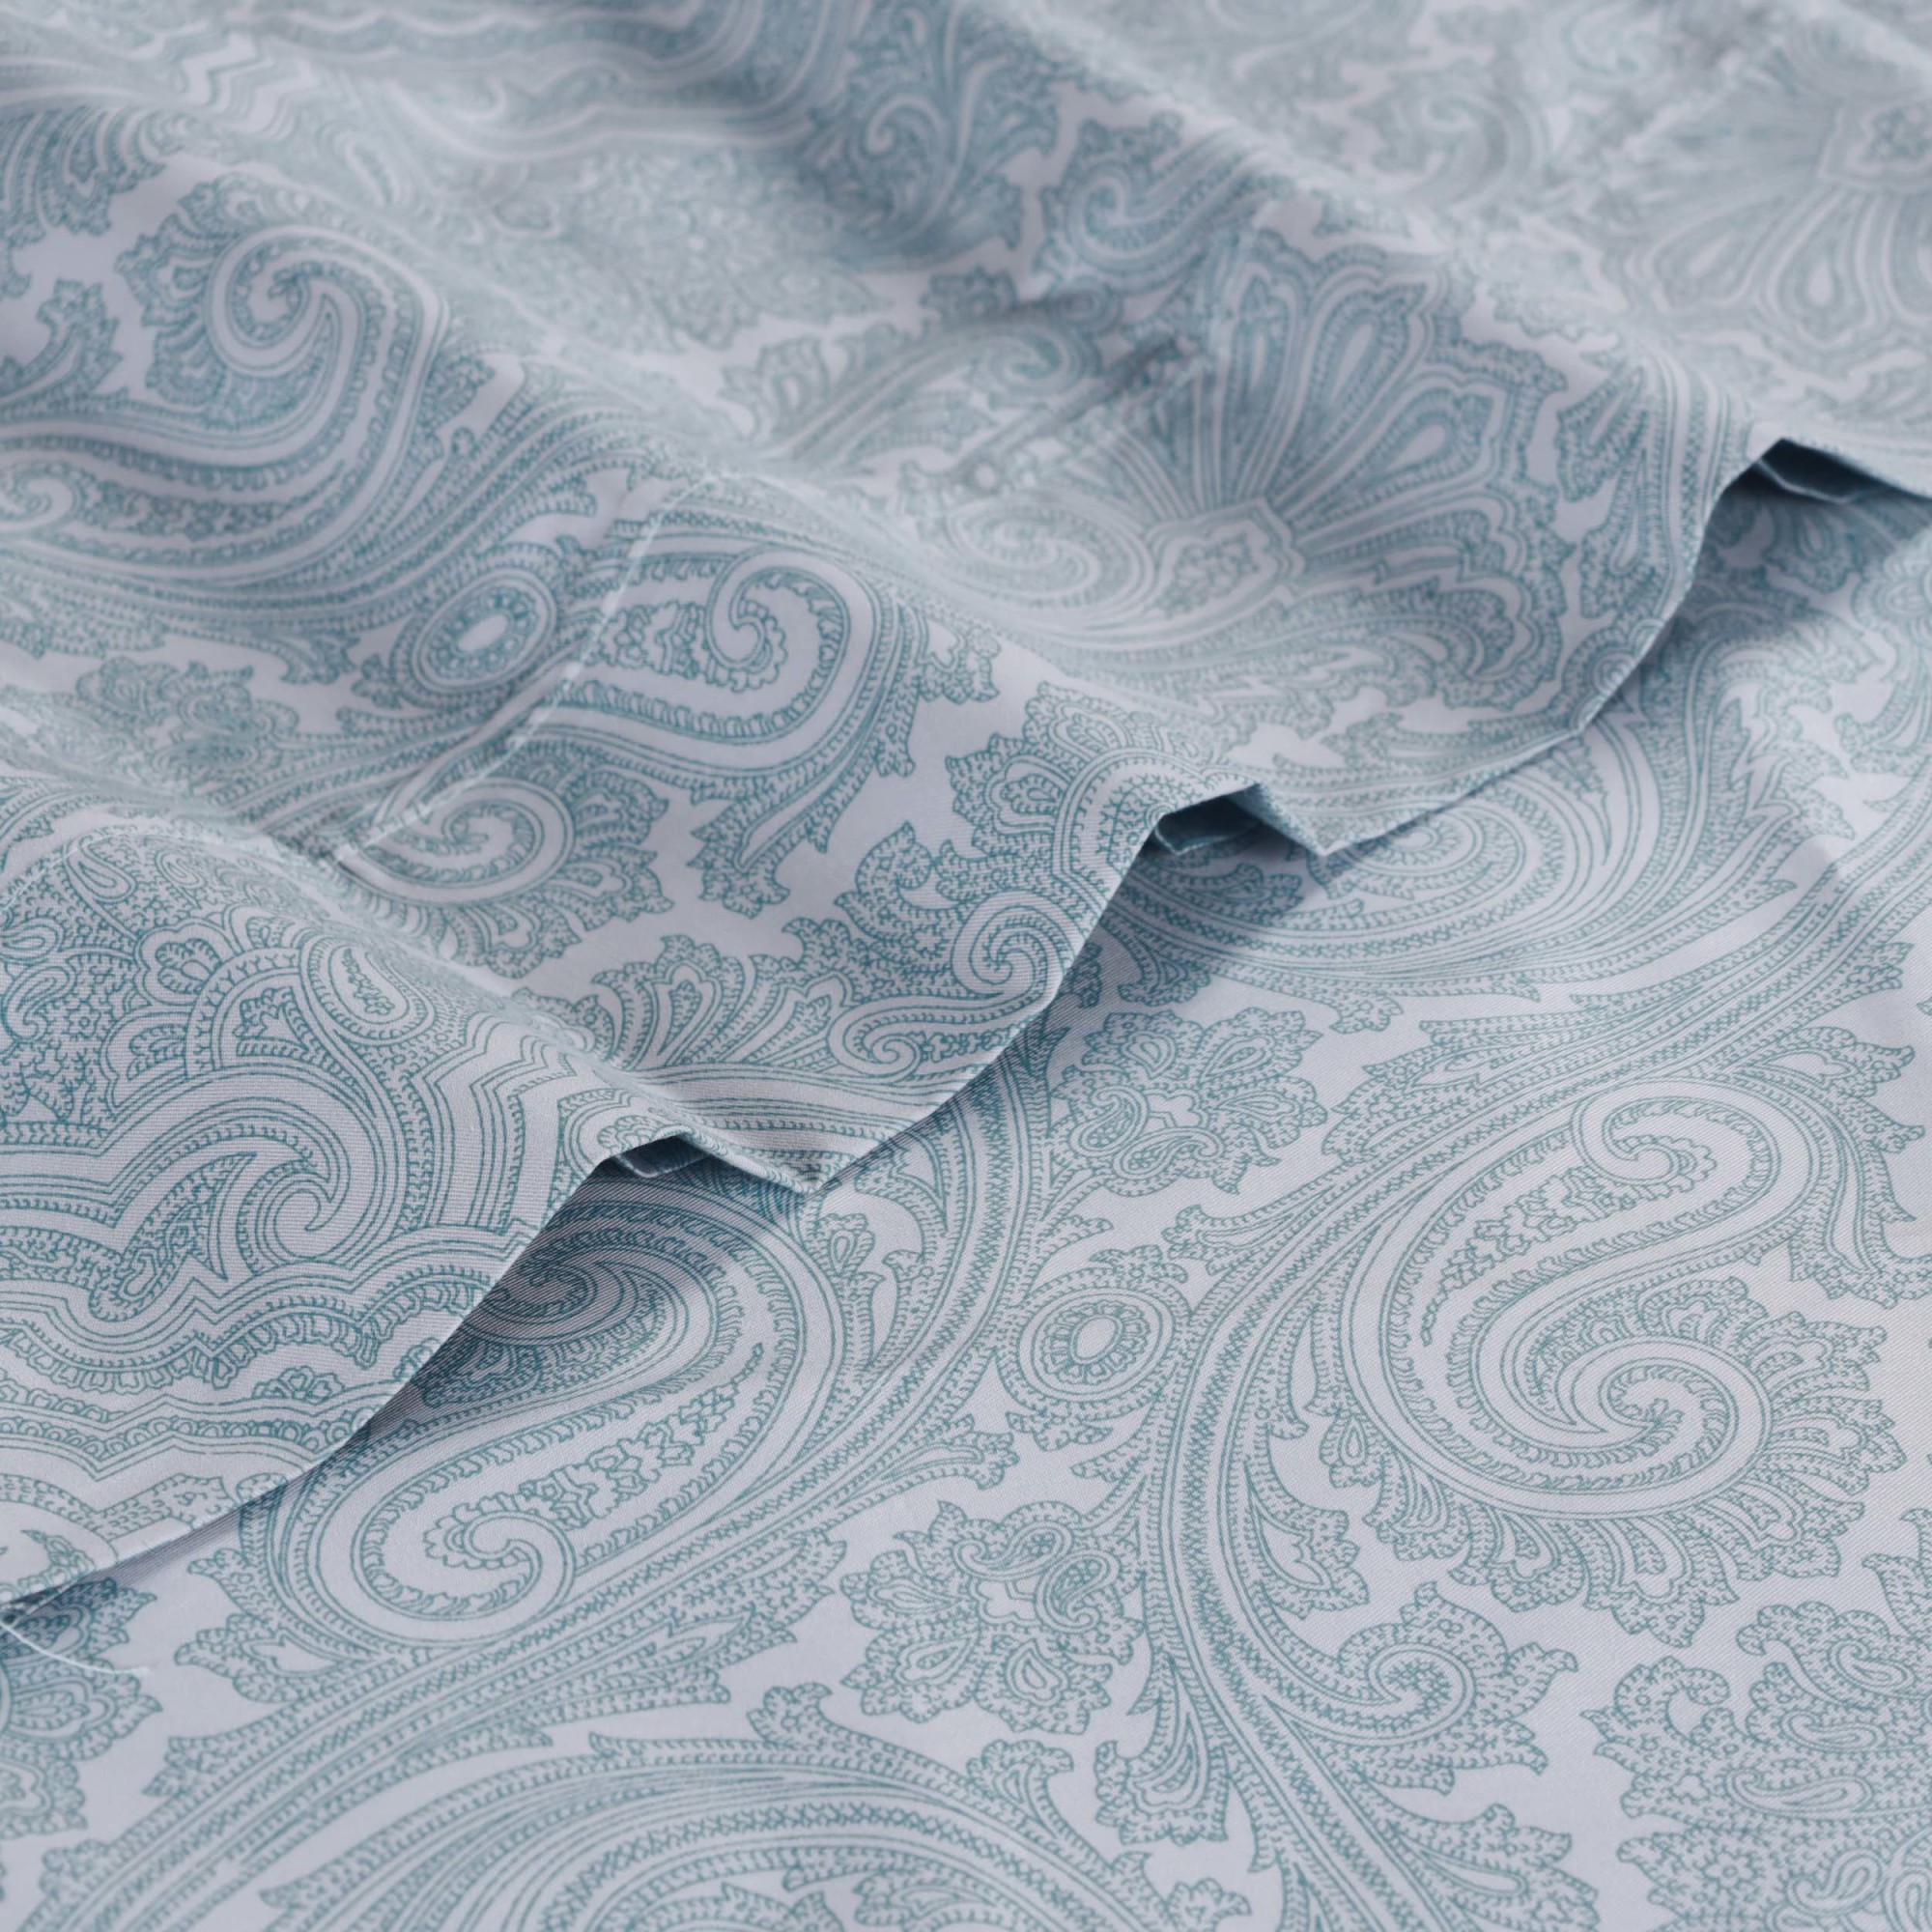 Superior 600 Thread Count Italian Paisley Cotton Blend Sheet Set, Full, Blue - image 3 of 7